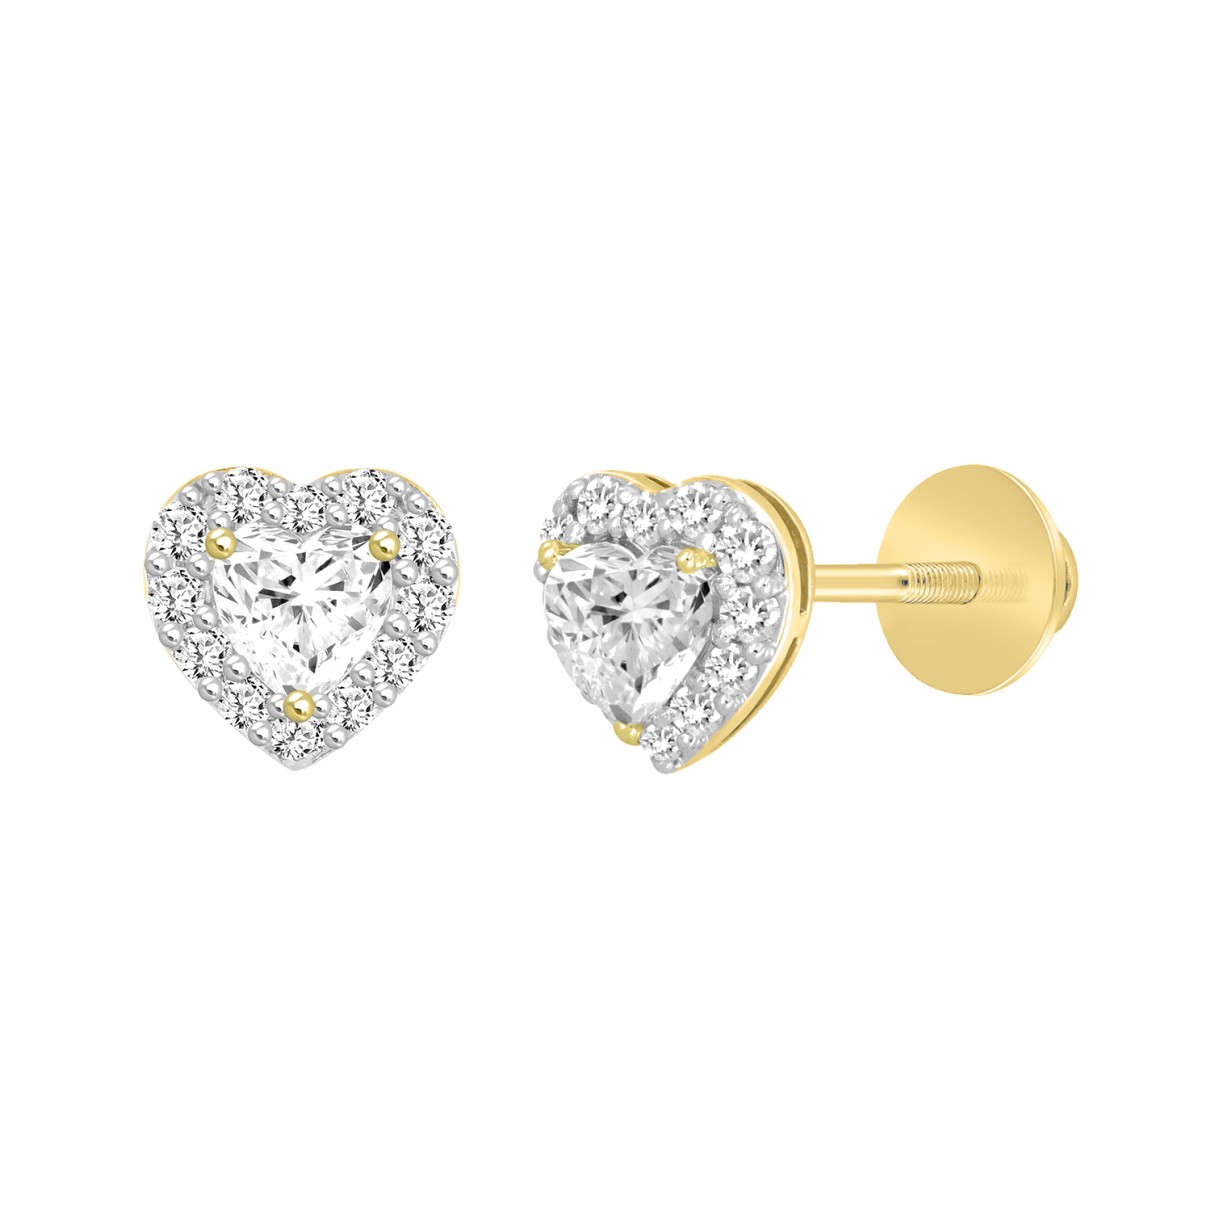 14K YELLOW GOLD1 3/8CT ROUND HEART DIAMOND LADIES EARRINGS (CENTER STONE EMERALD DIAMOND 1CT )